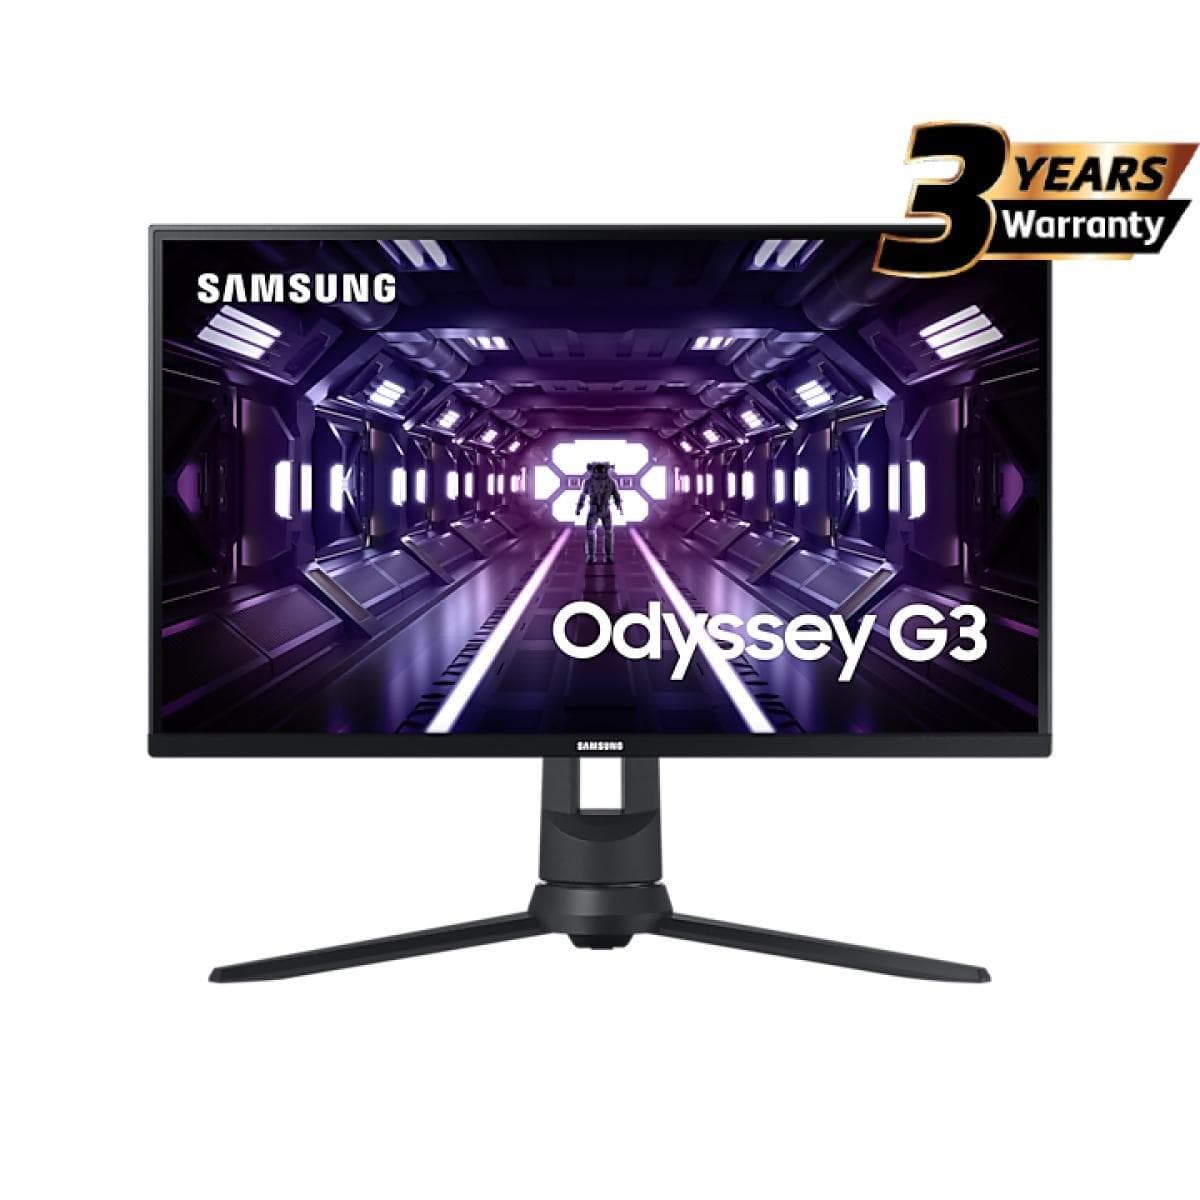 SAMSUNG Computer Monitors Samsung 27" Odyssey G3 FHD (1920 X 1080) VA 144Hz 1Ms FreeSync Premium, Full Adjustable Stand - Flat Gaming Monitor